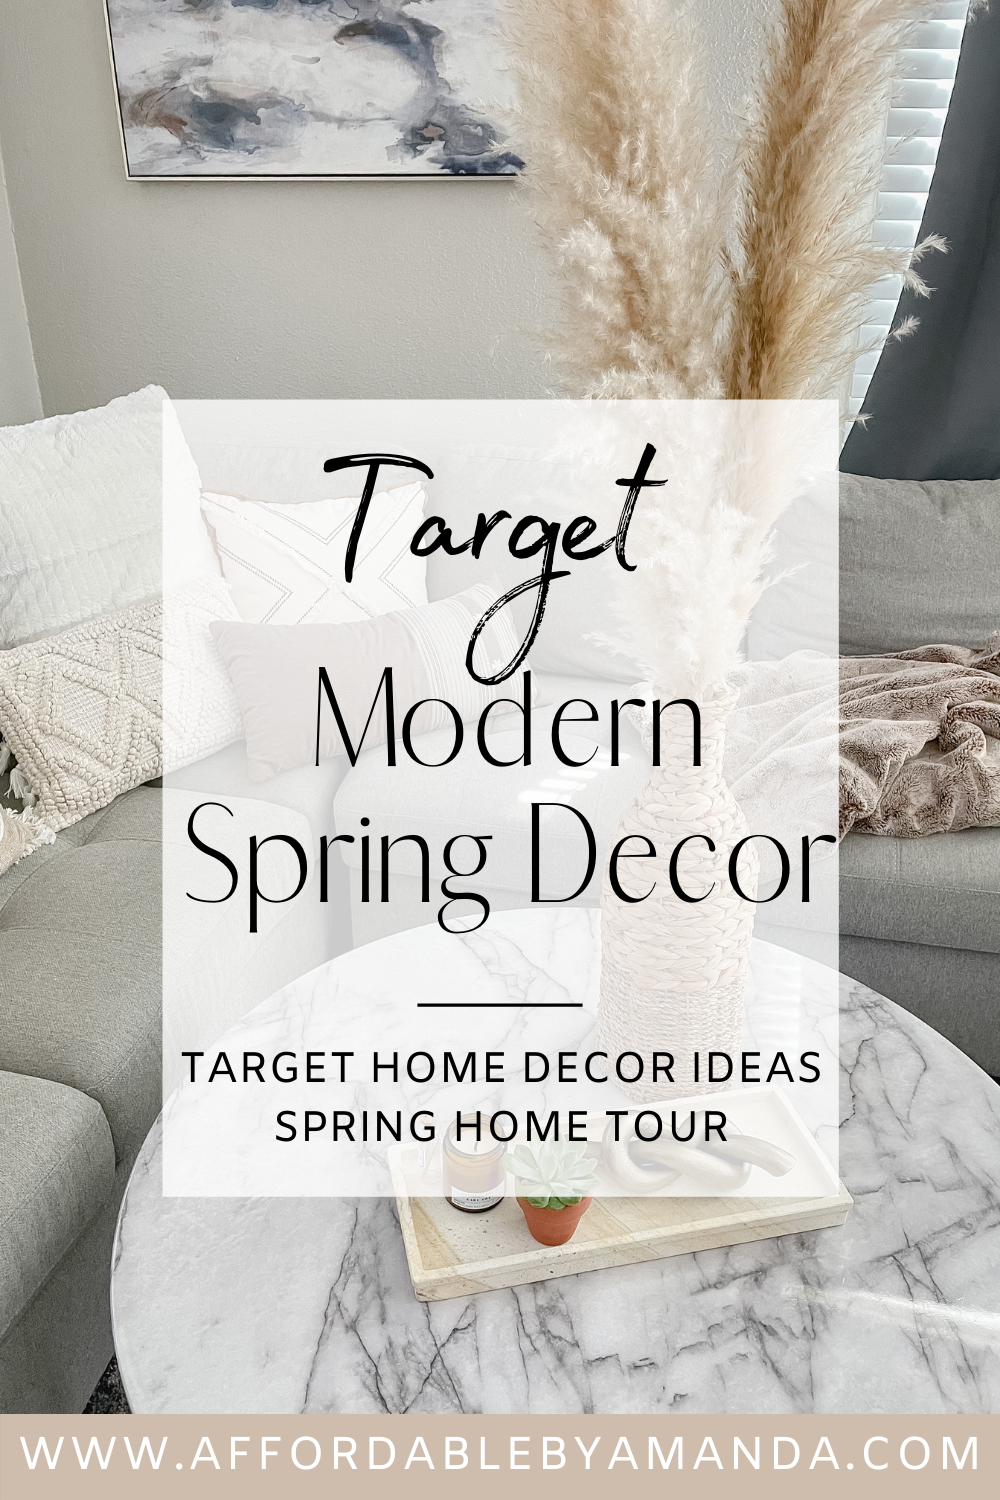 Target Modern Spring Decor 2021 - Target Spring Decor - Target Home Decor 2021 - Home Decor Collections - Living Room Design Ideas